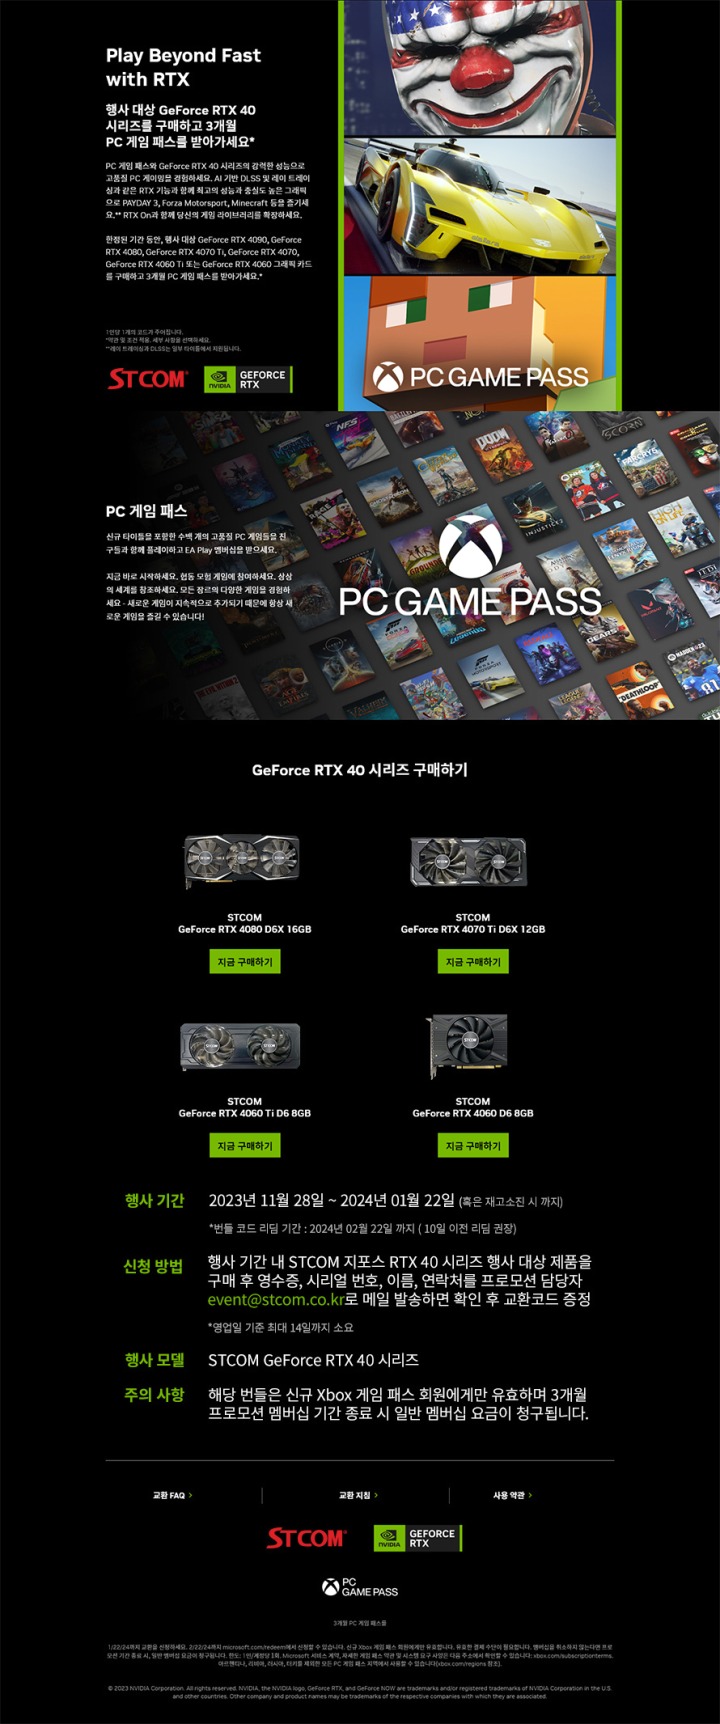 STCOM GeForce RTX 40 series PC Game Bundle promotion_Landingpage_가로 890px ver_주의사항 추가본.jpg